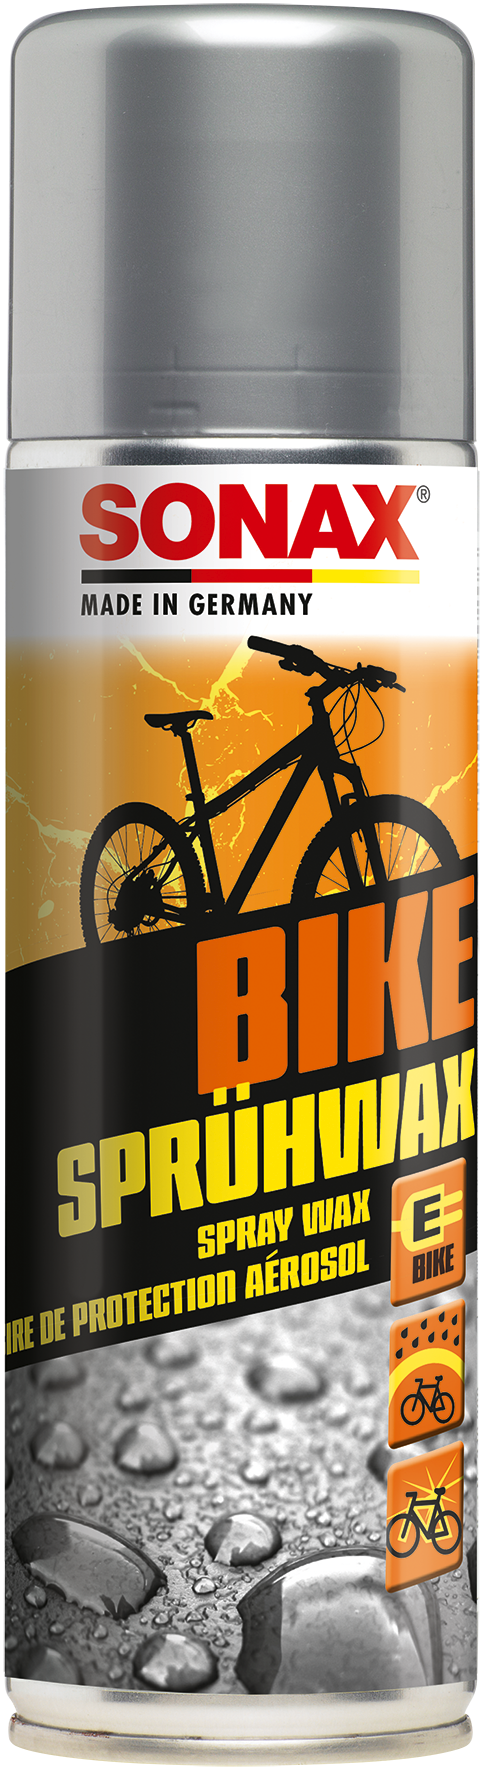 SONAX Bike Spray Wax 300ml